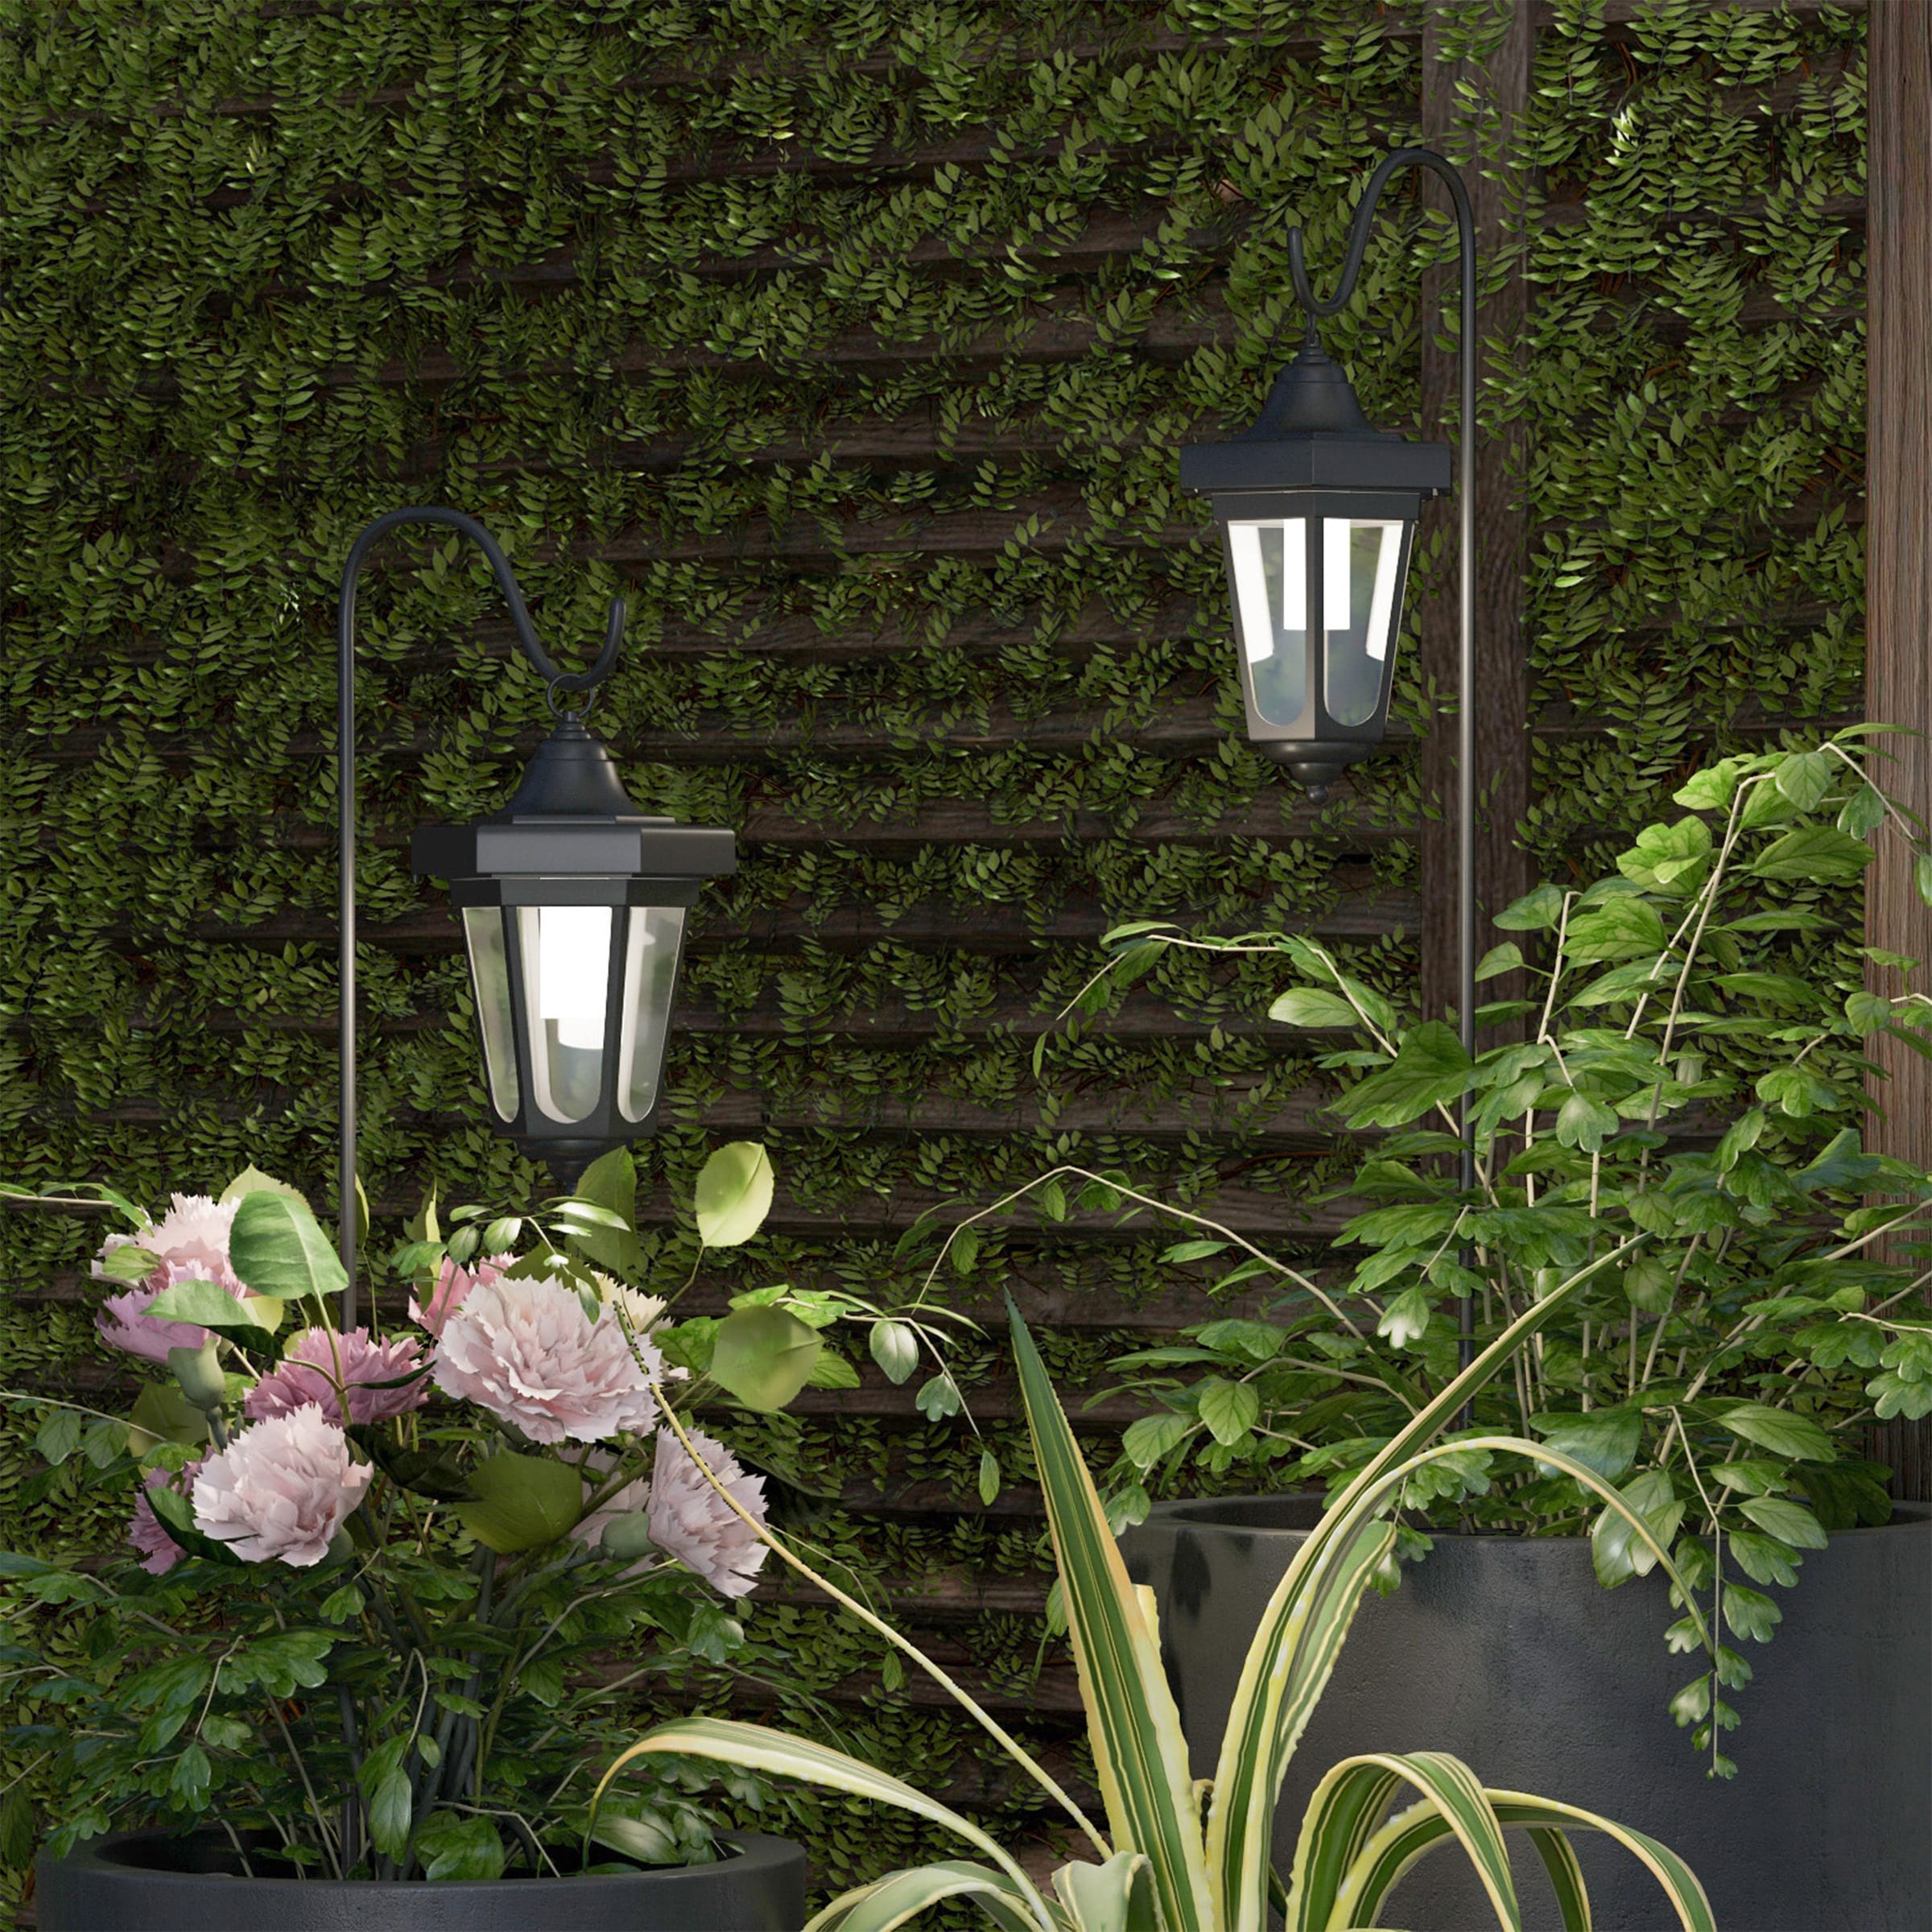 10X 100W LED Flood Light Outdoor Wall Spotlight Landscape Garden Cool White Lamp 